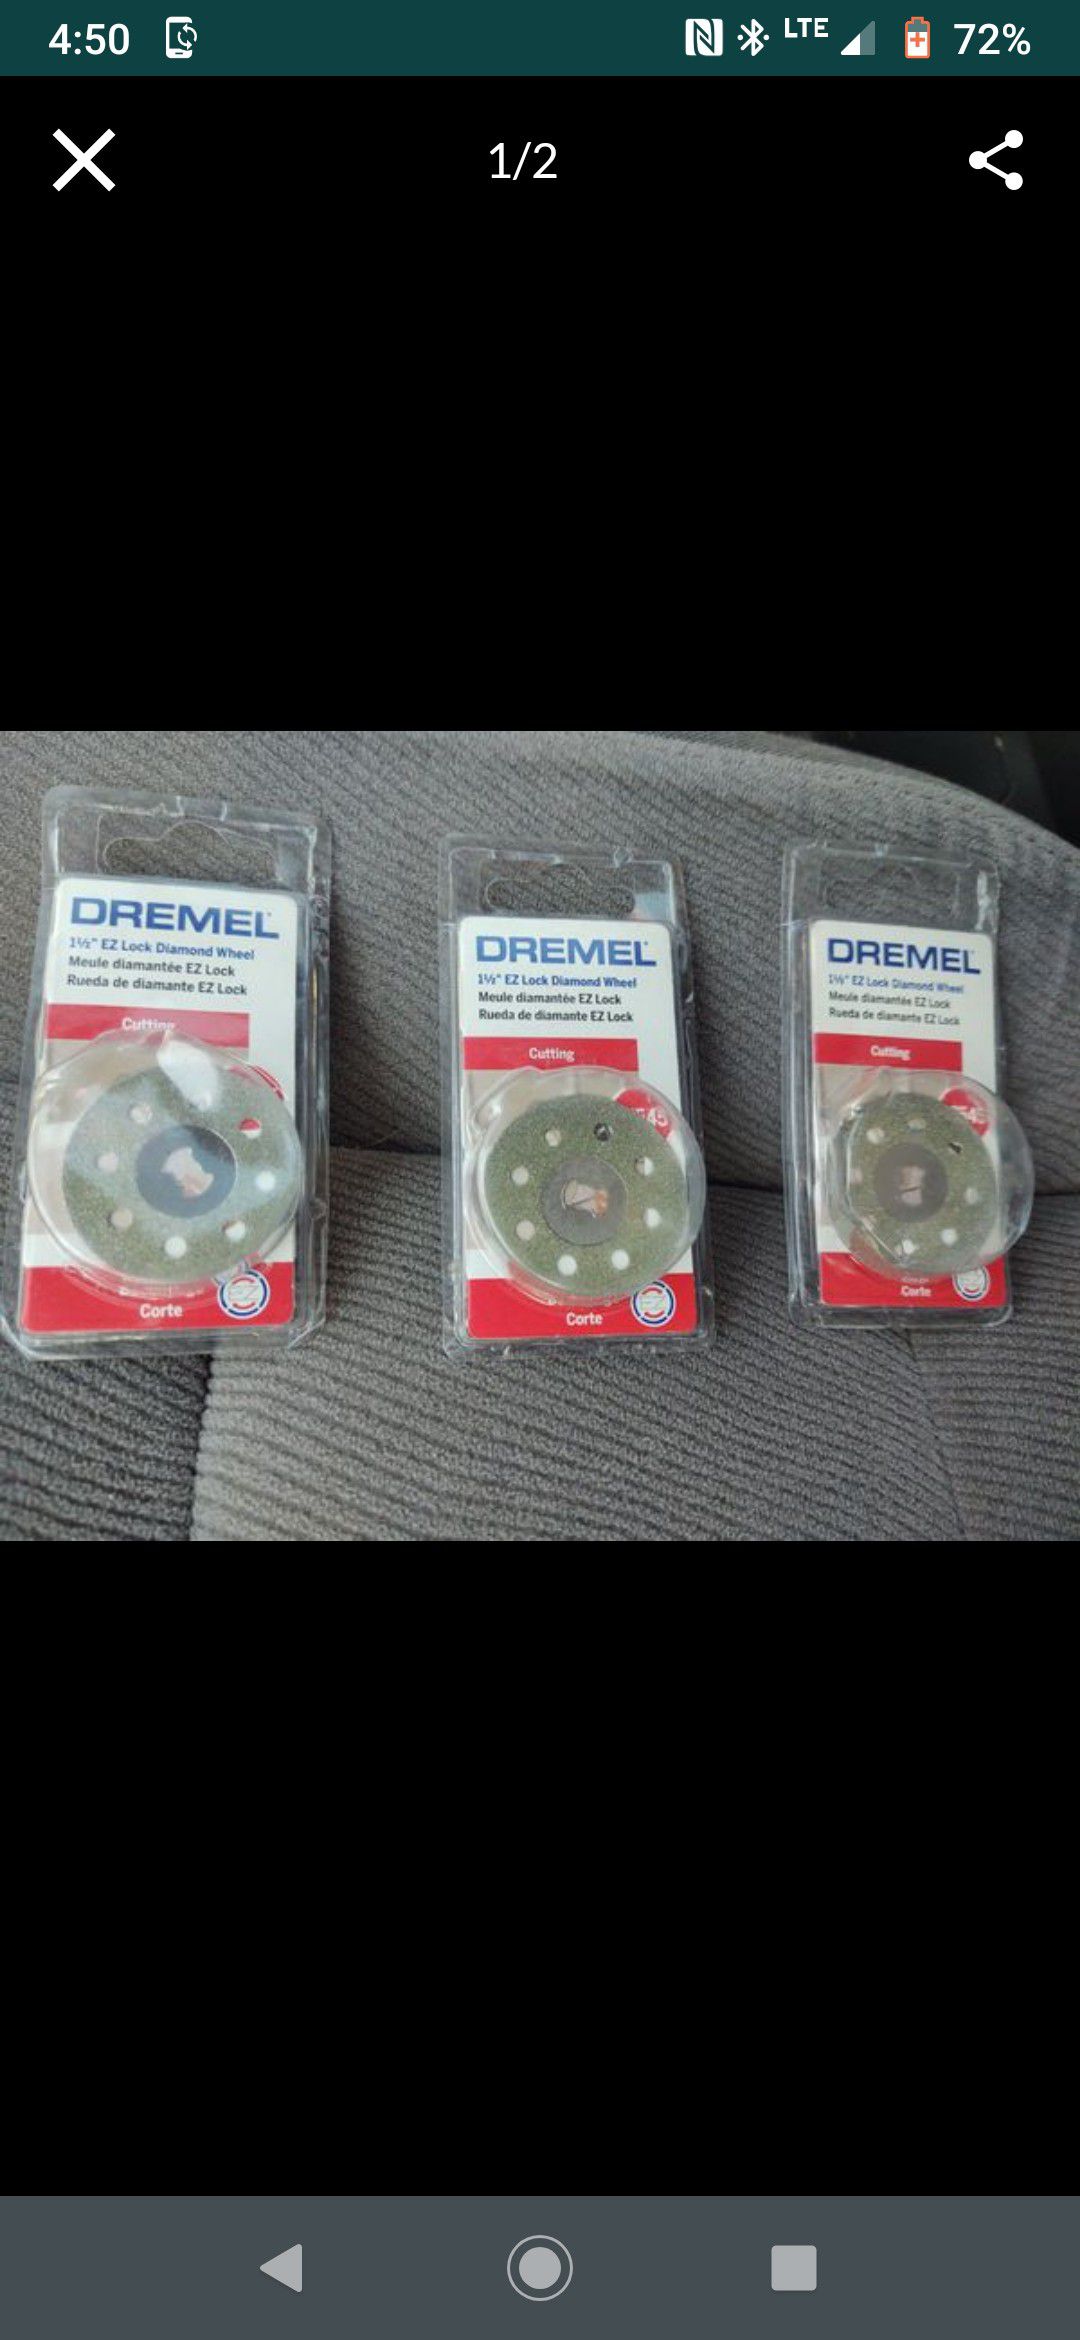 Dremel 1 1/2 ez lock diamond wheel all for 40 or 15 each reg.price each are $25